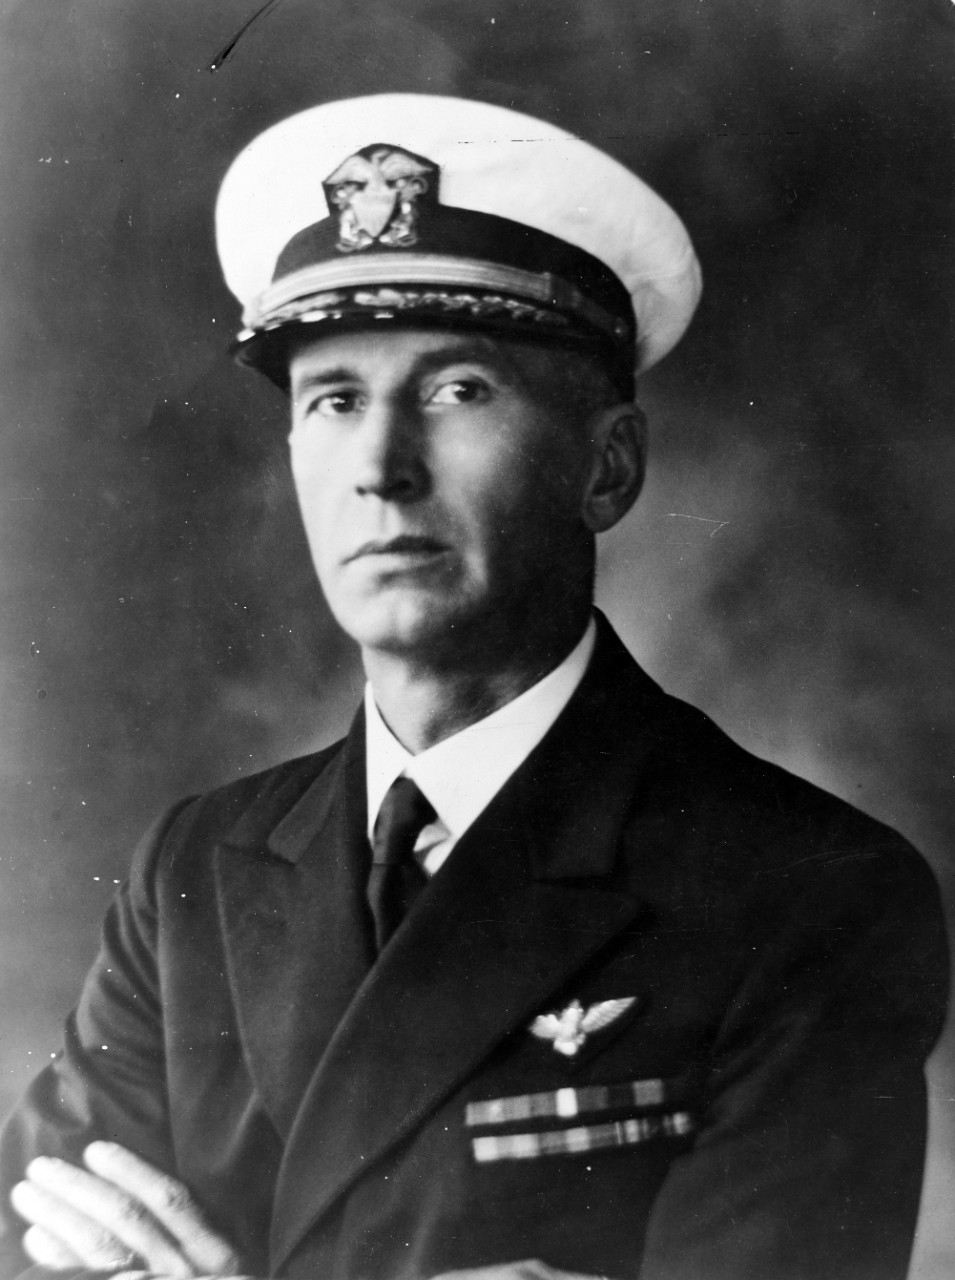 Captain Ernest J. King